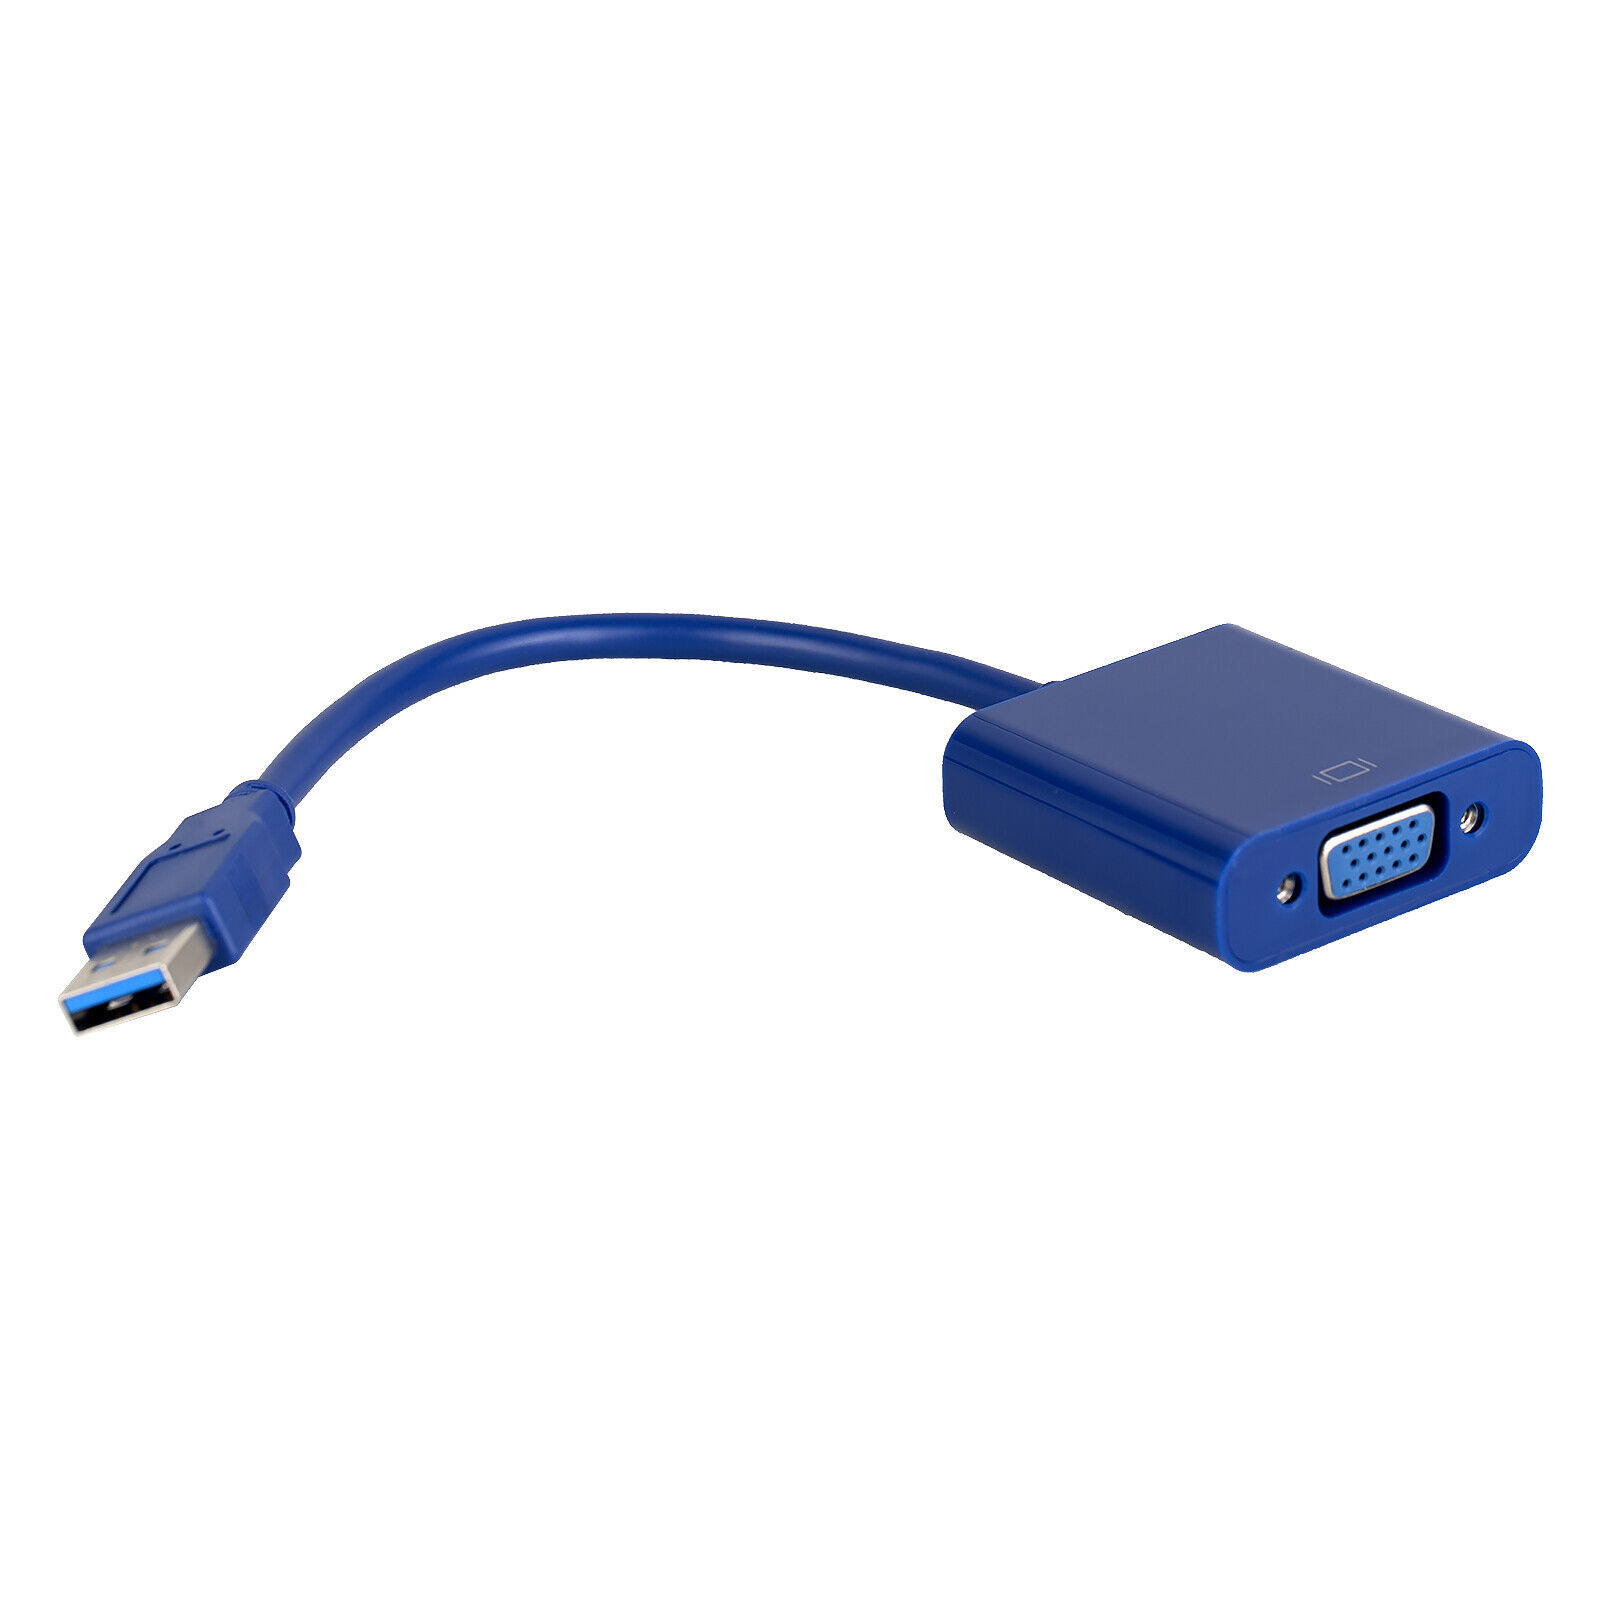 USB 3.0 VGA Port Adapter External Video Graphics Card Pigtail 1080P LCD Extend